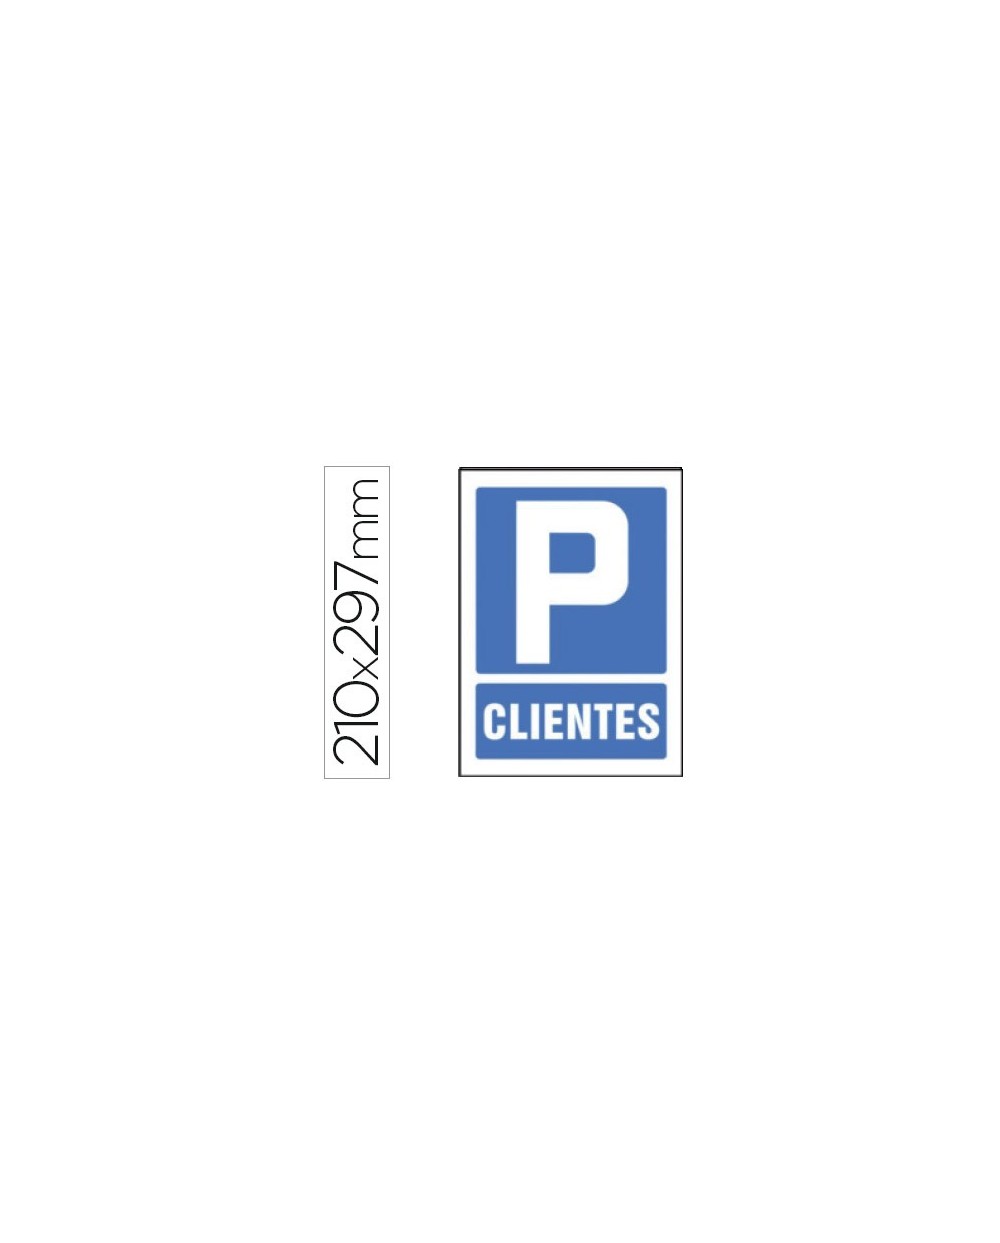 Pictograma syssa senal de parking clientes en pvc 210x297 mm